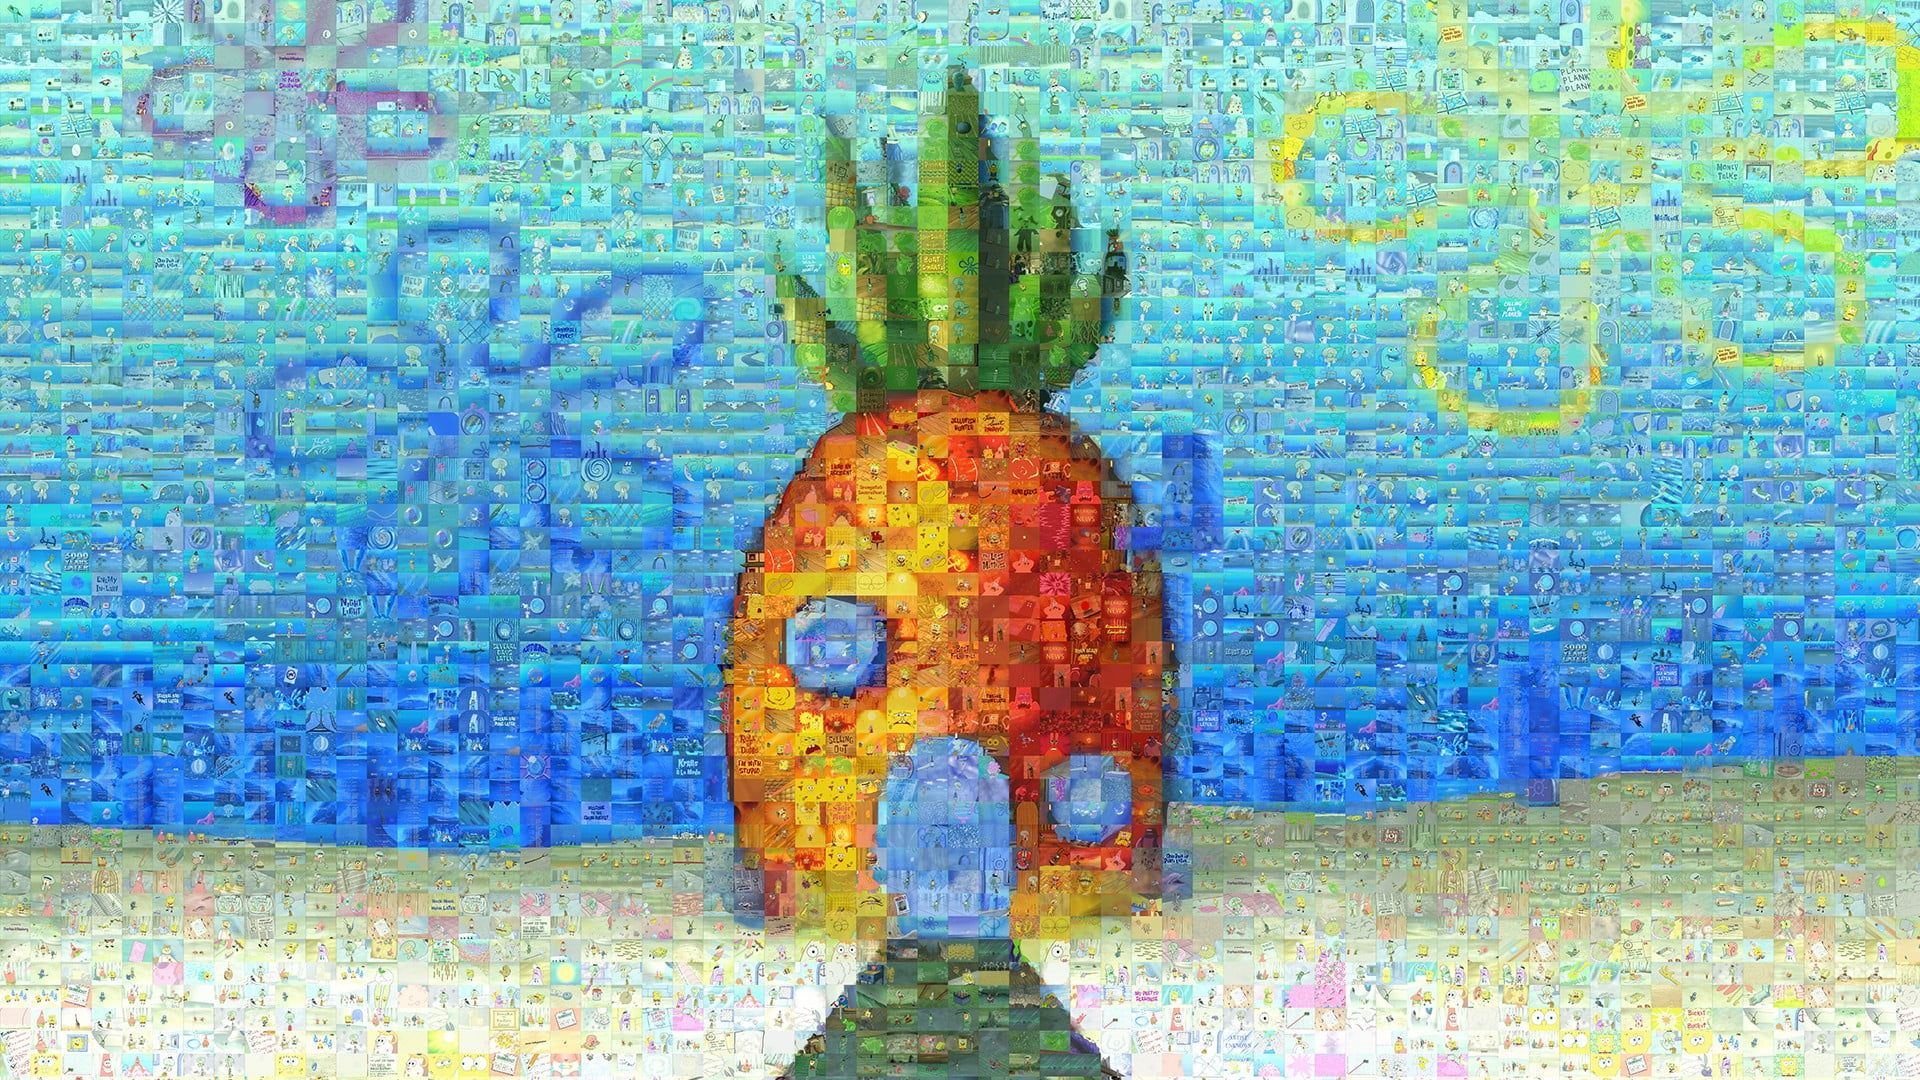 SpongeBob SquarePants pineapple house illustration, SpongeBob